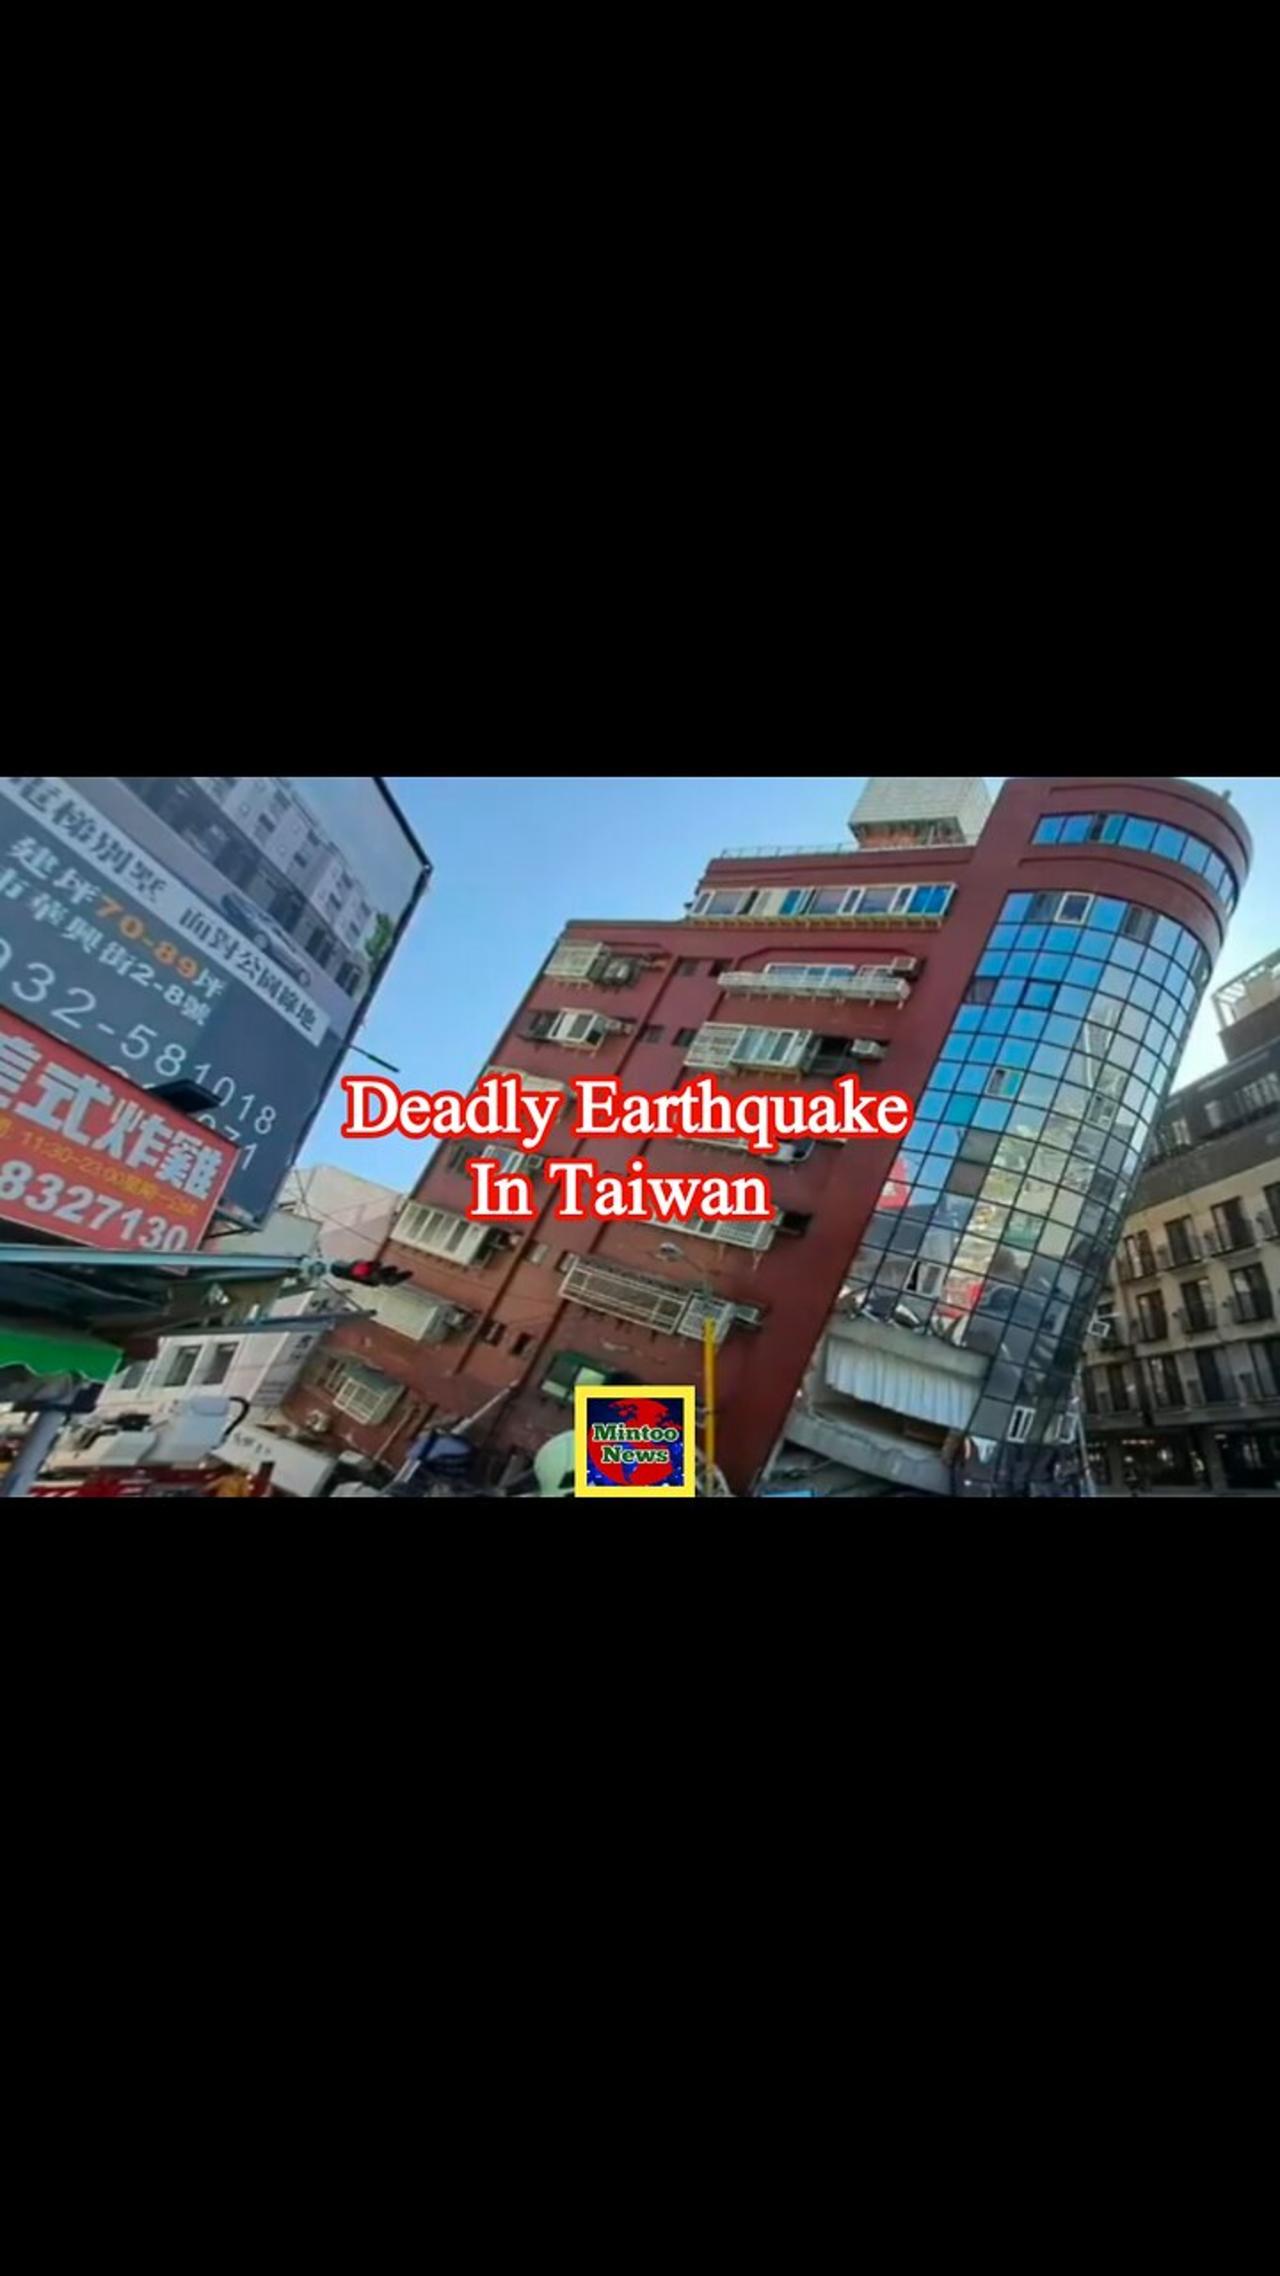 Taiwan earthquake: 9 dead, hundreds injured in 7.4 magnitude trembler